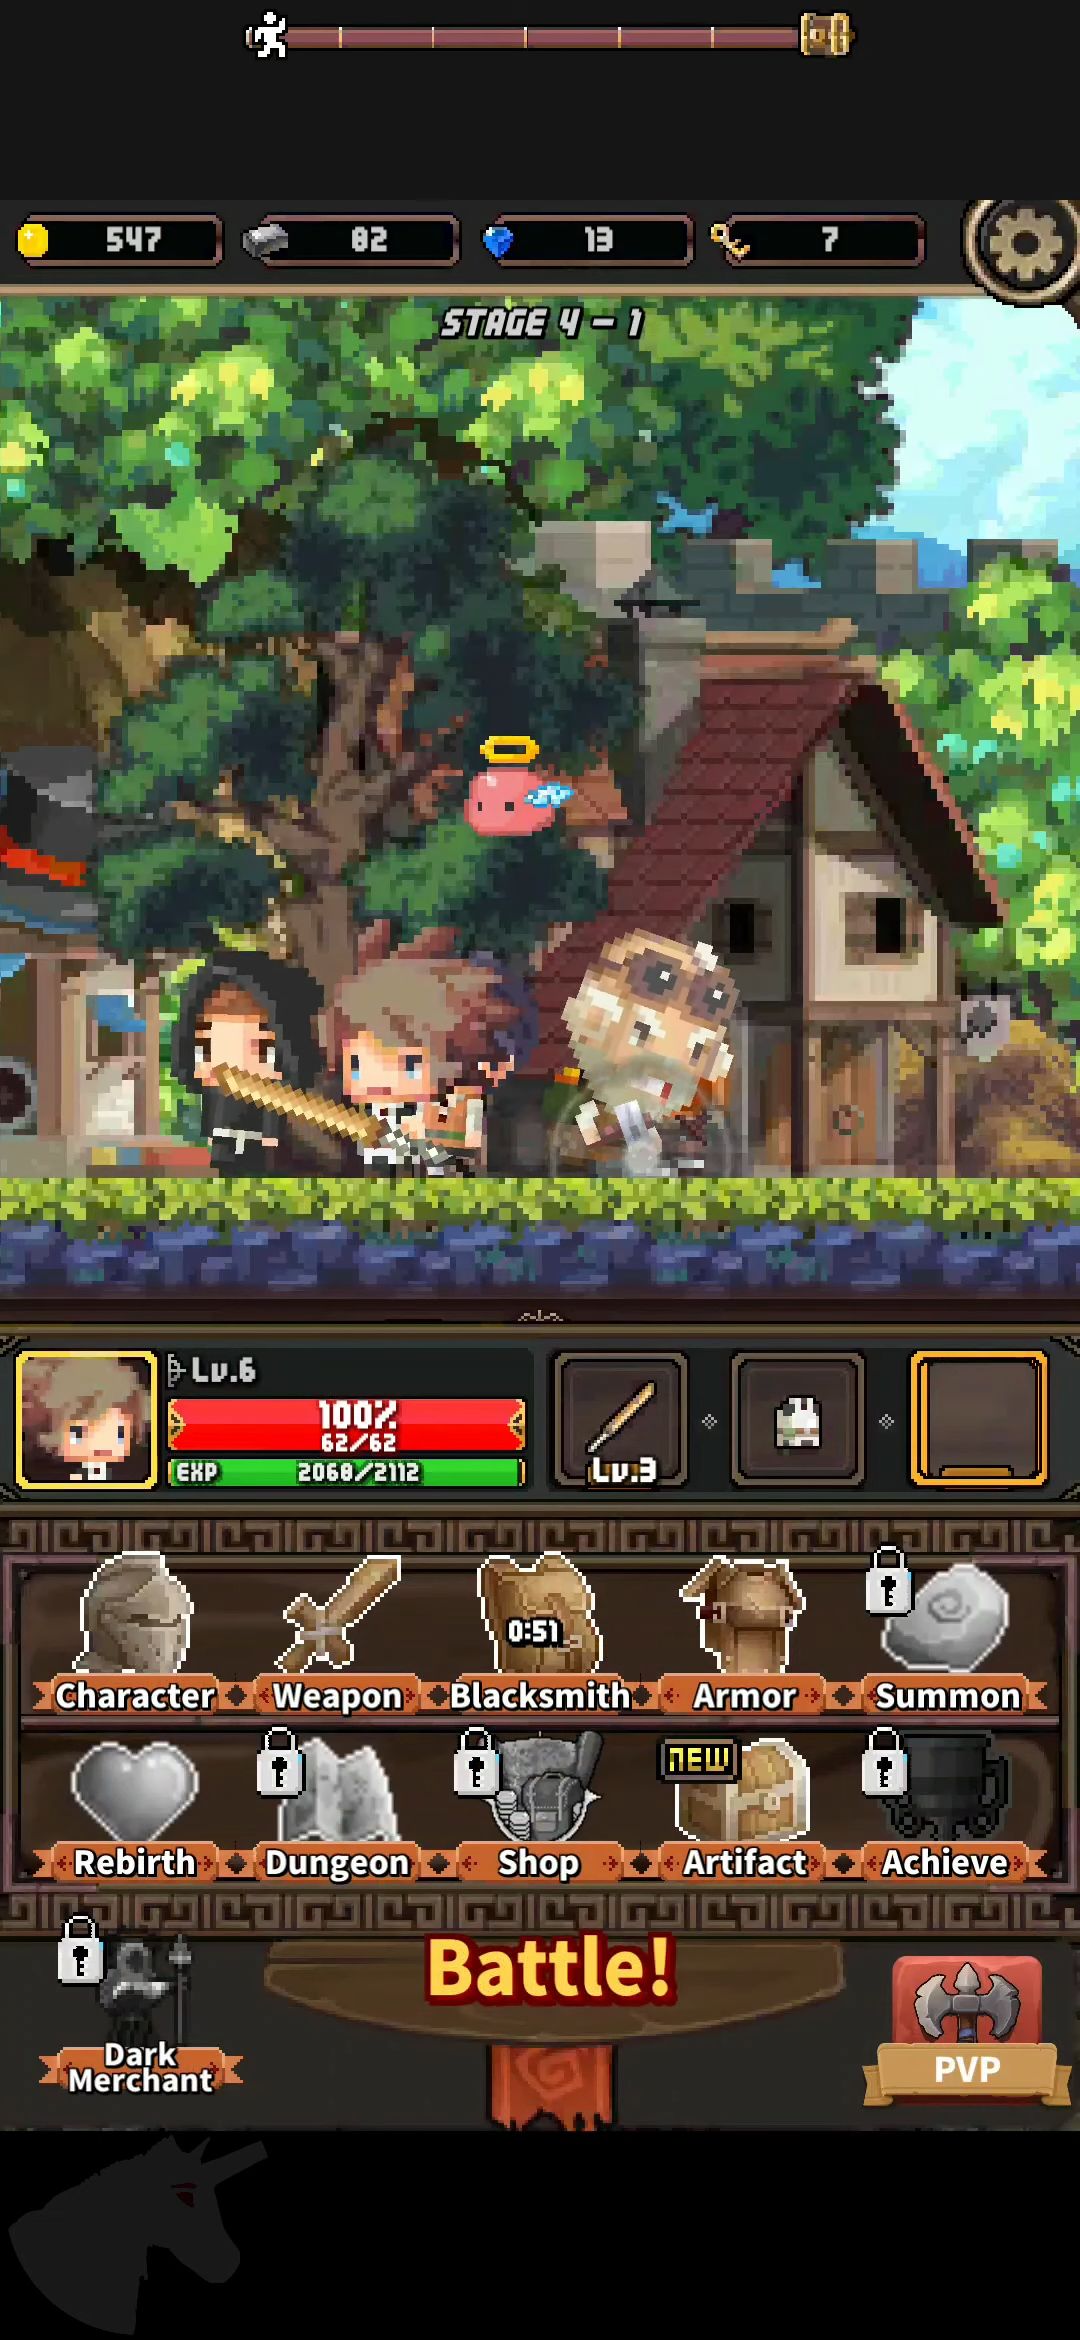 Kingdom Warrior - IDLE RPG - Android game screenshots.